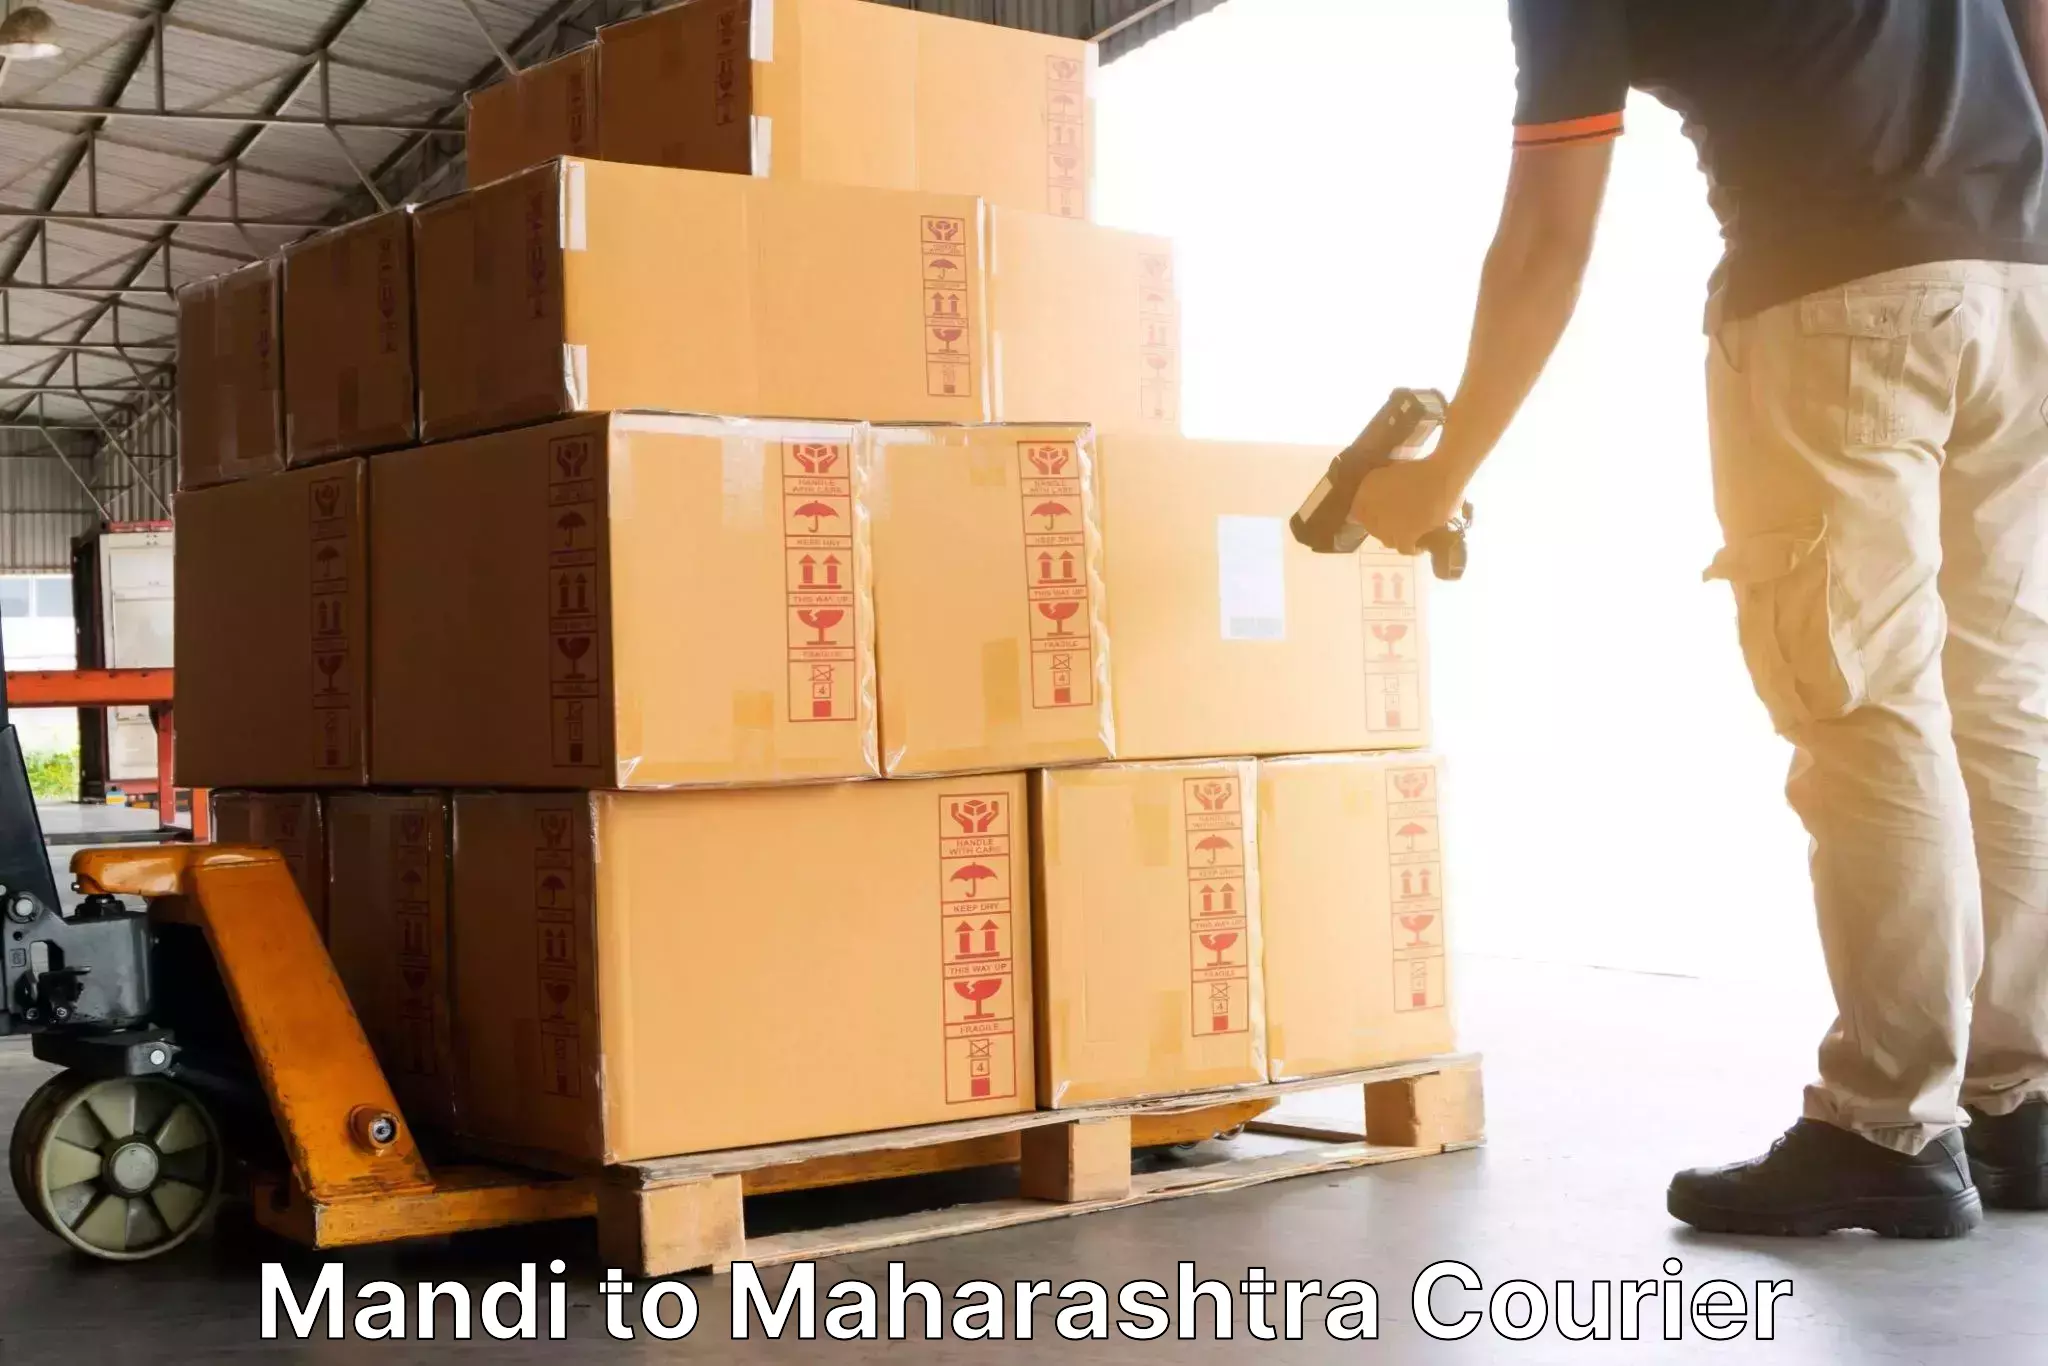 High-performance logistics Mandi to Sawantwadi